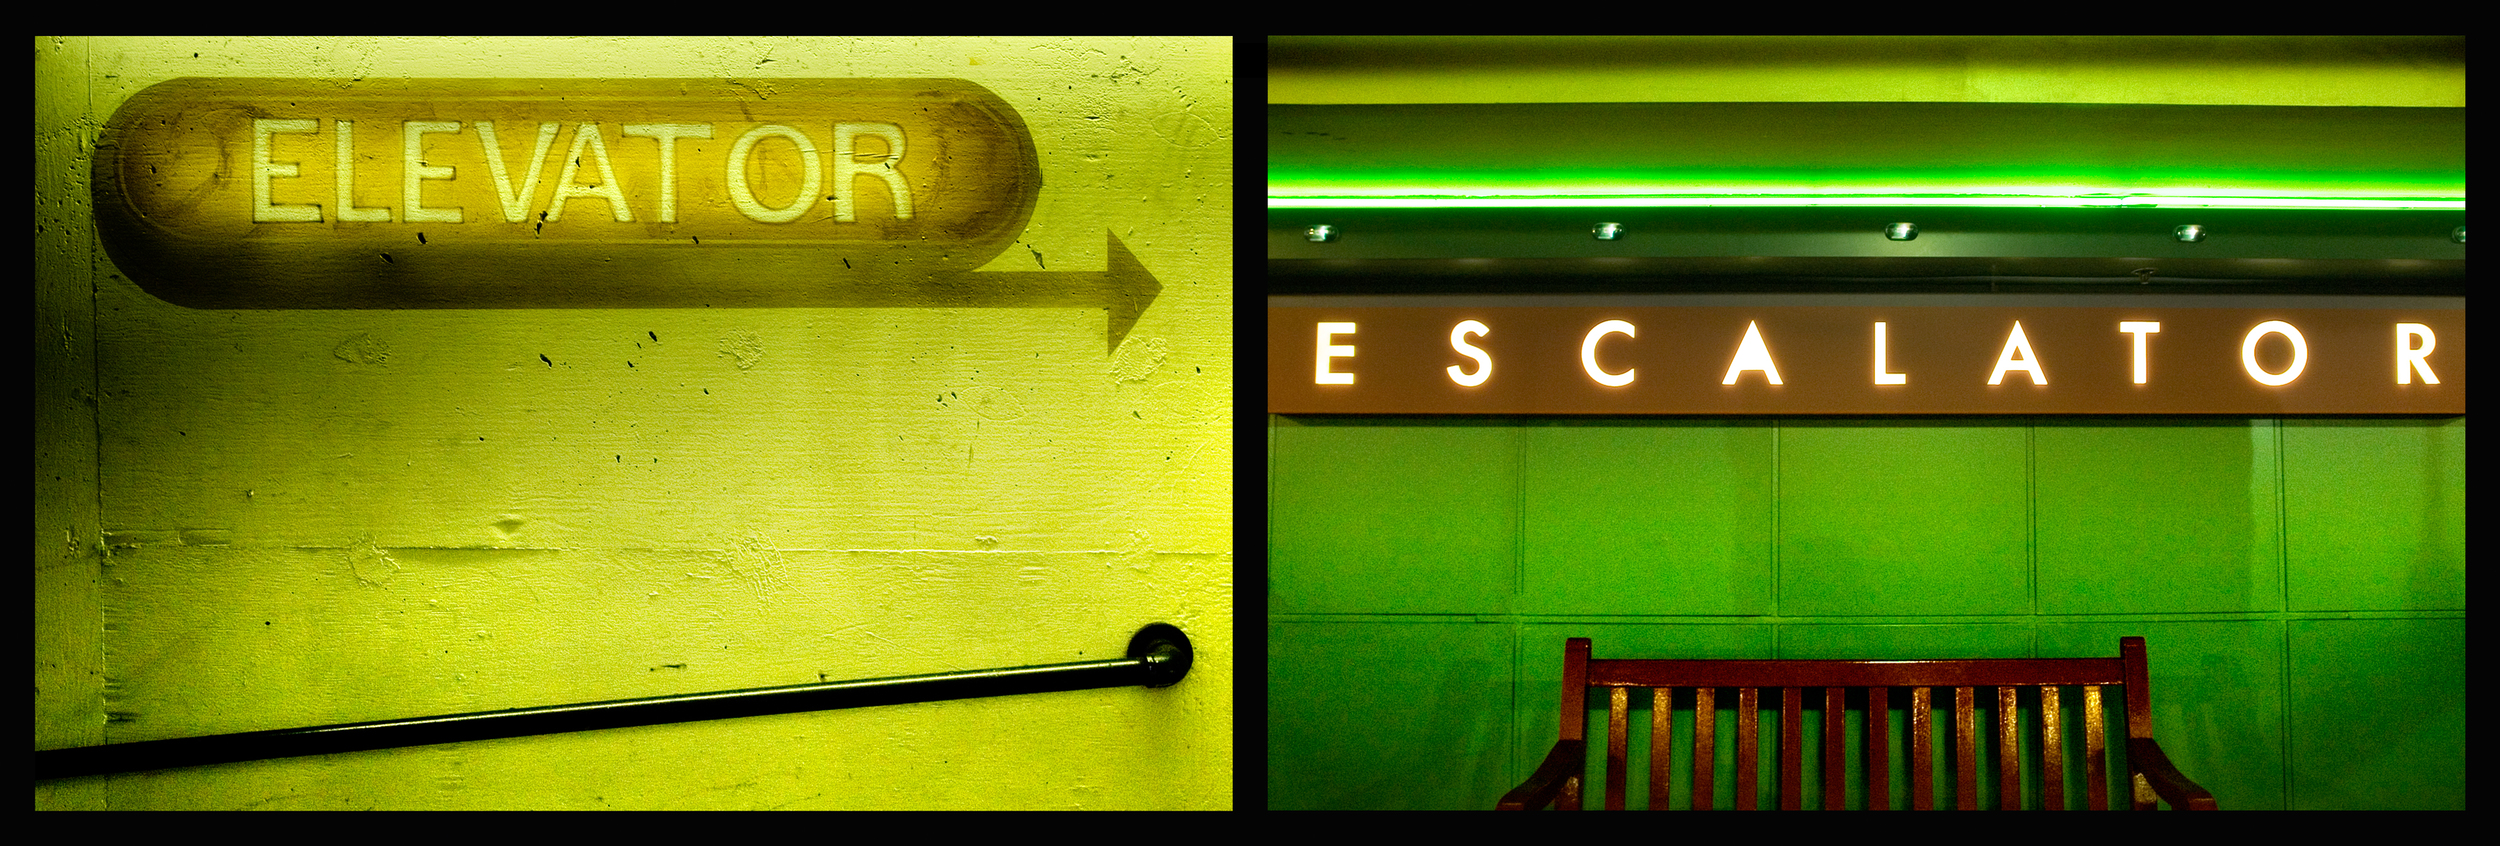 elevator_escalator_wip1.jpg